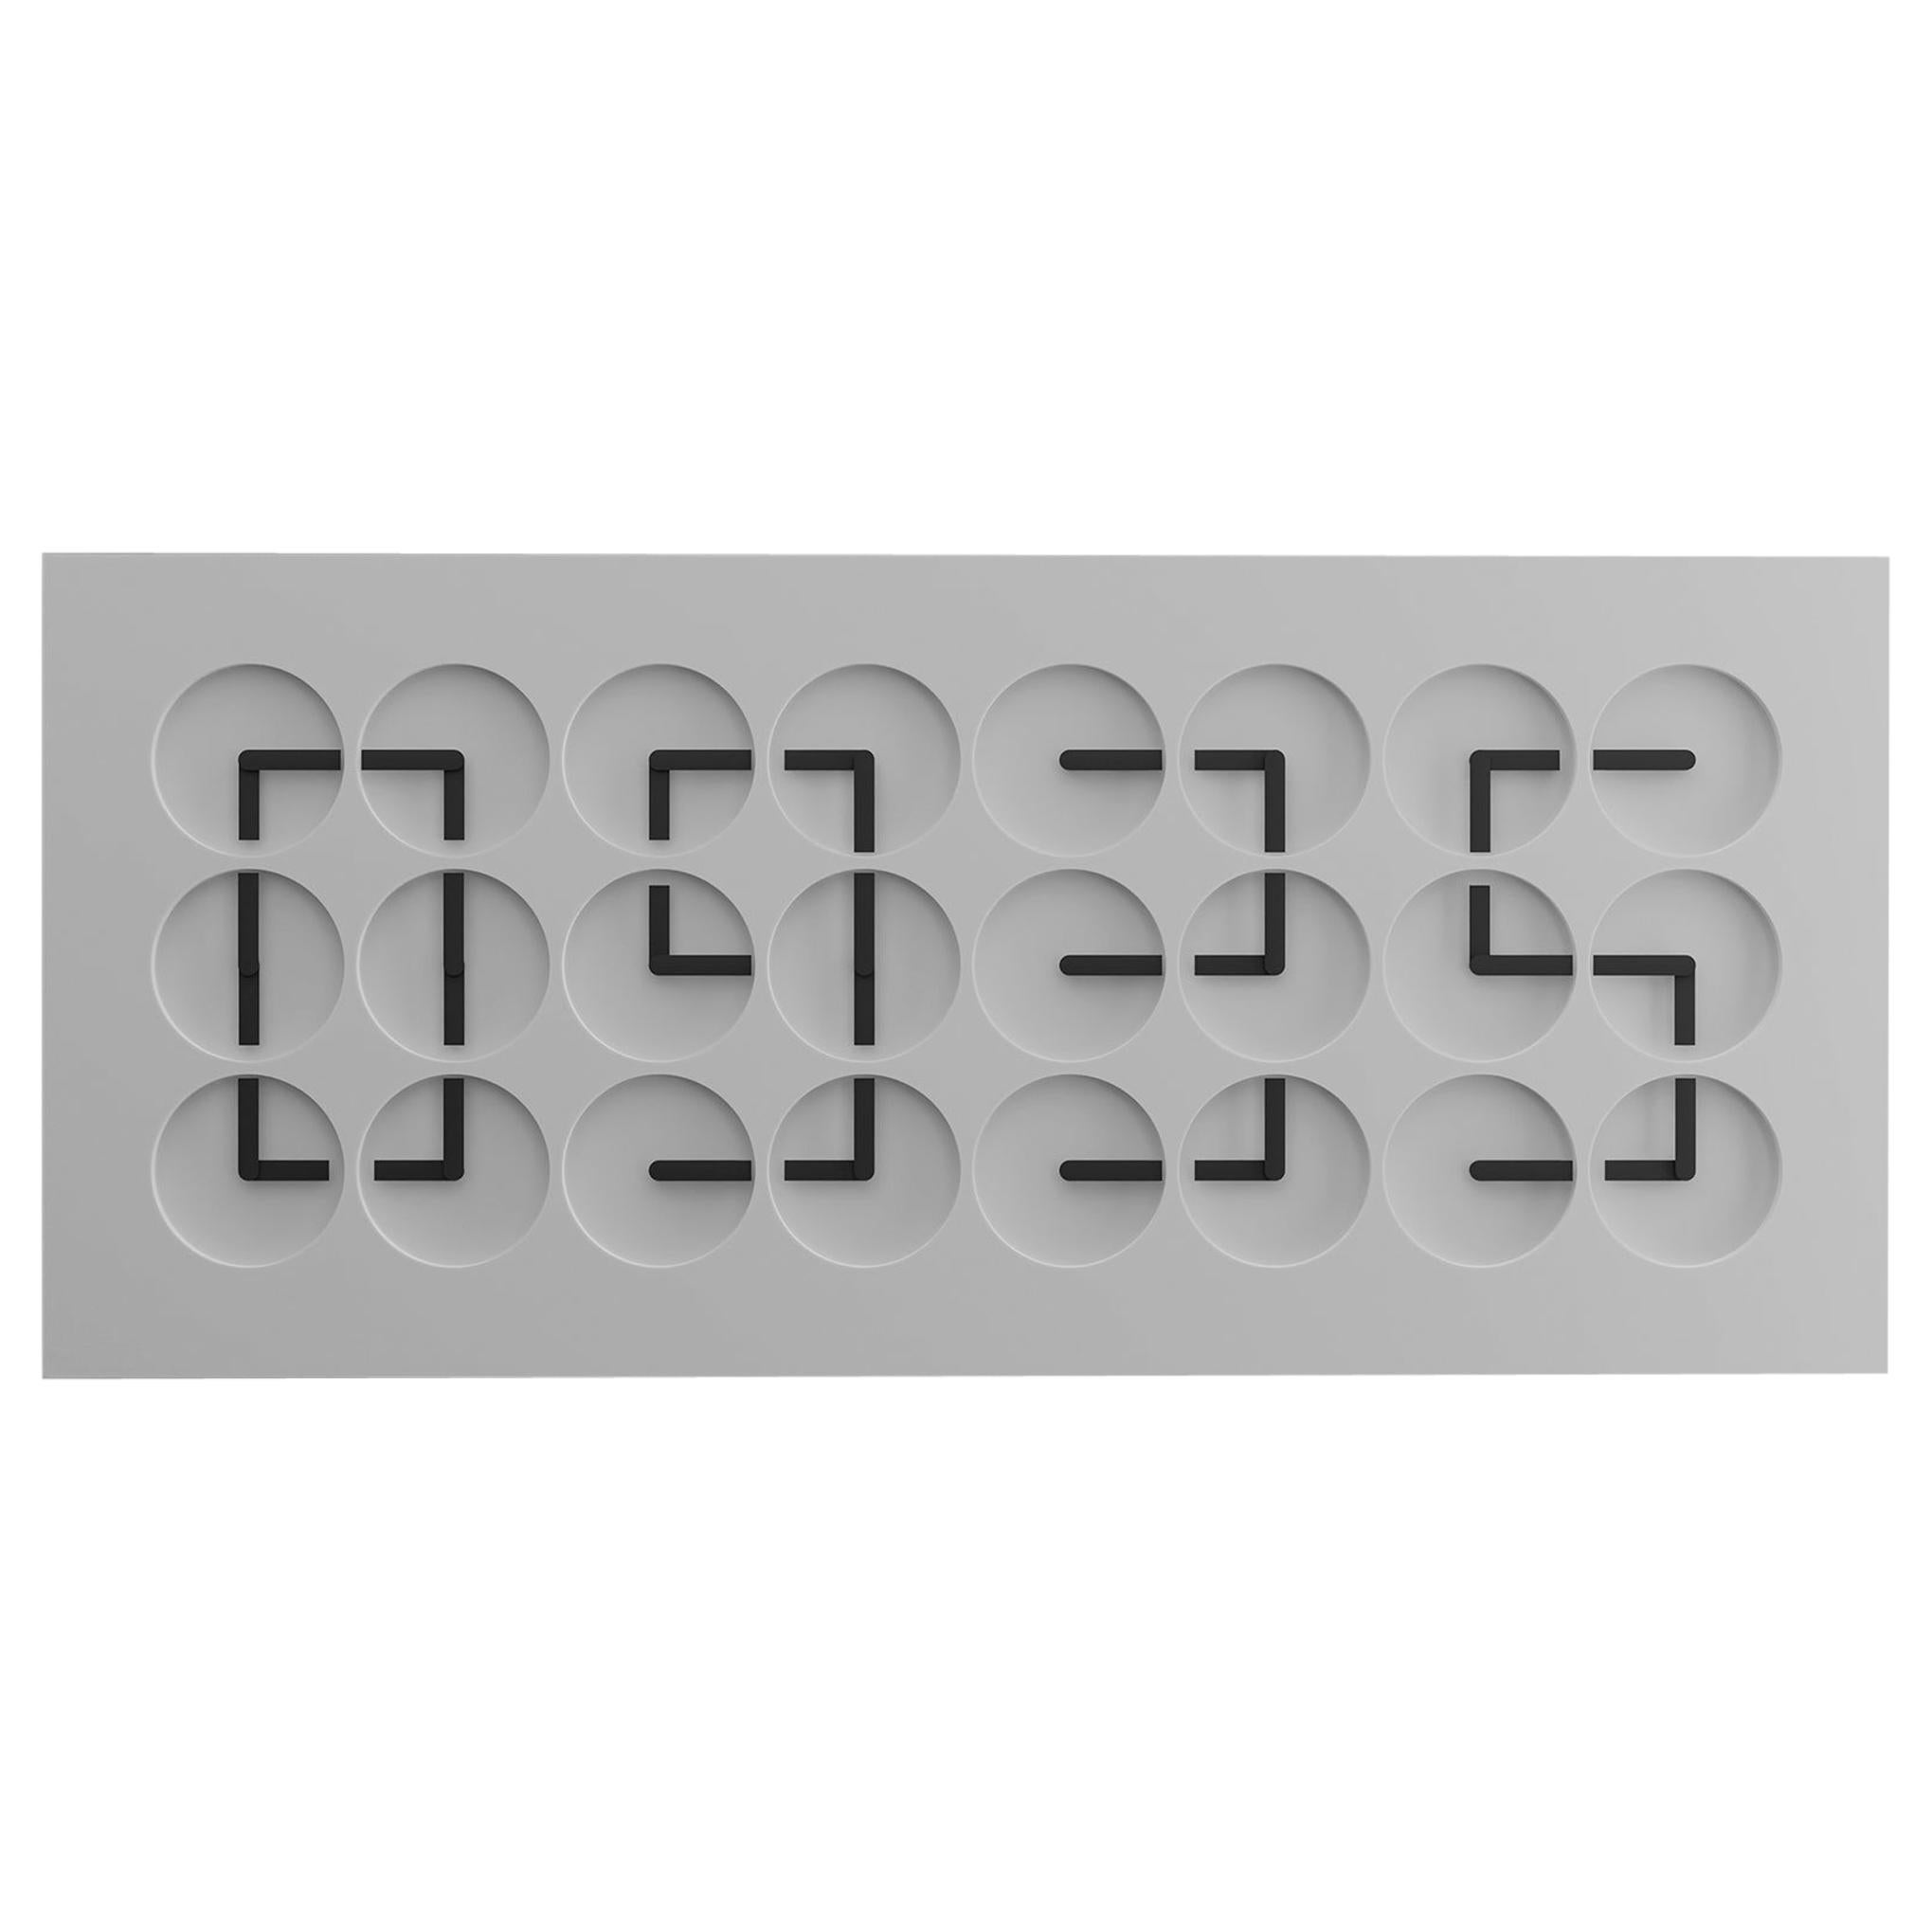 ClockClock 24 Grey by Humans since 1982, Kinetic Sculpture, Wall Clock